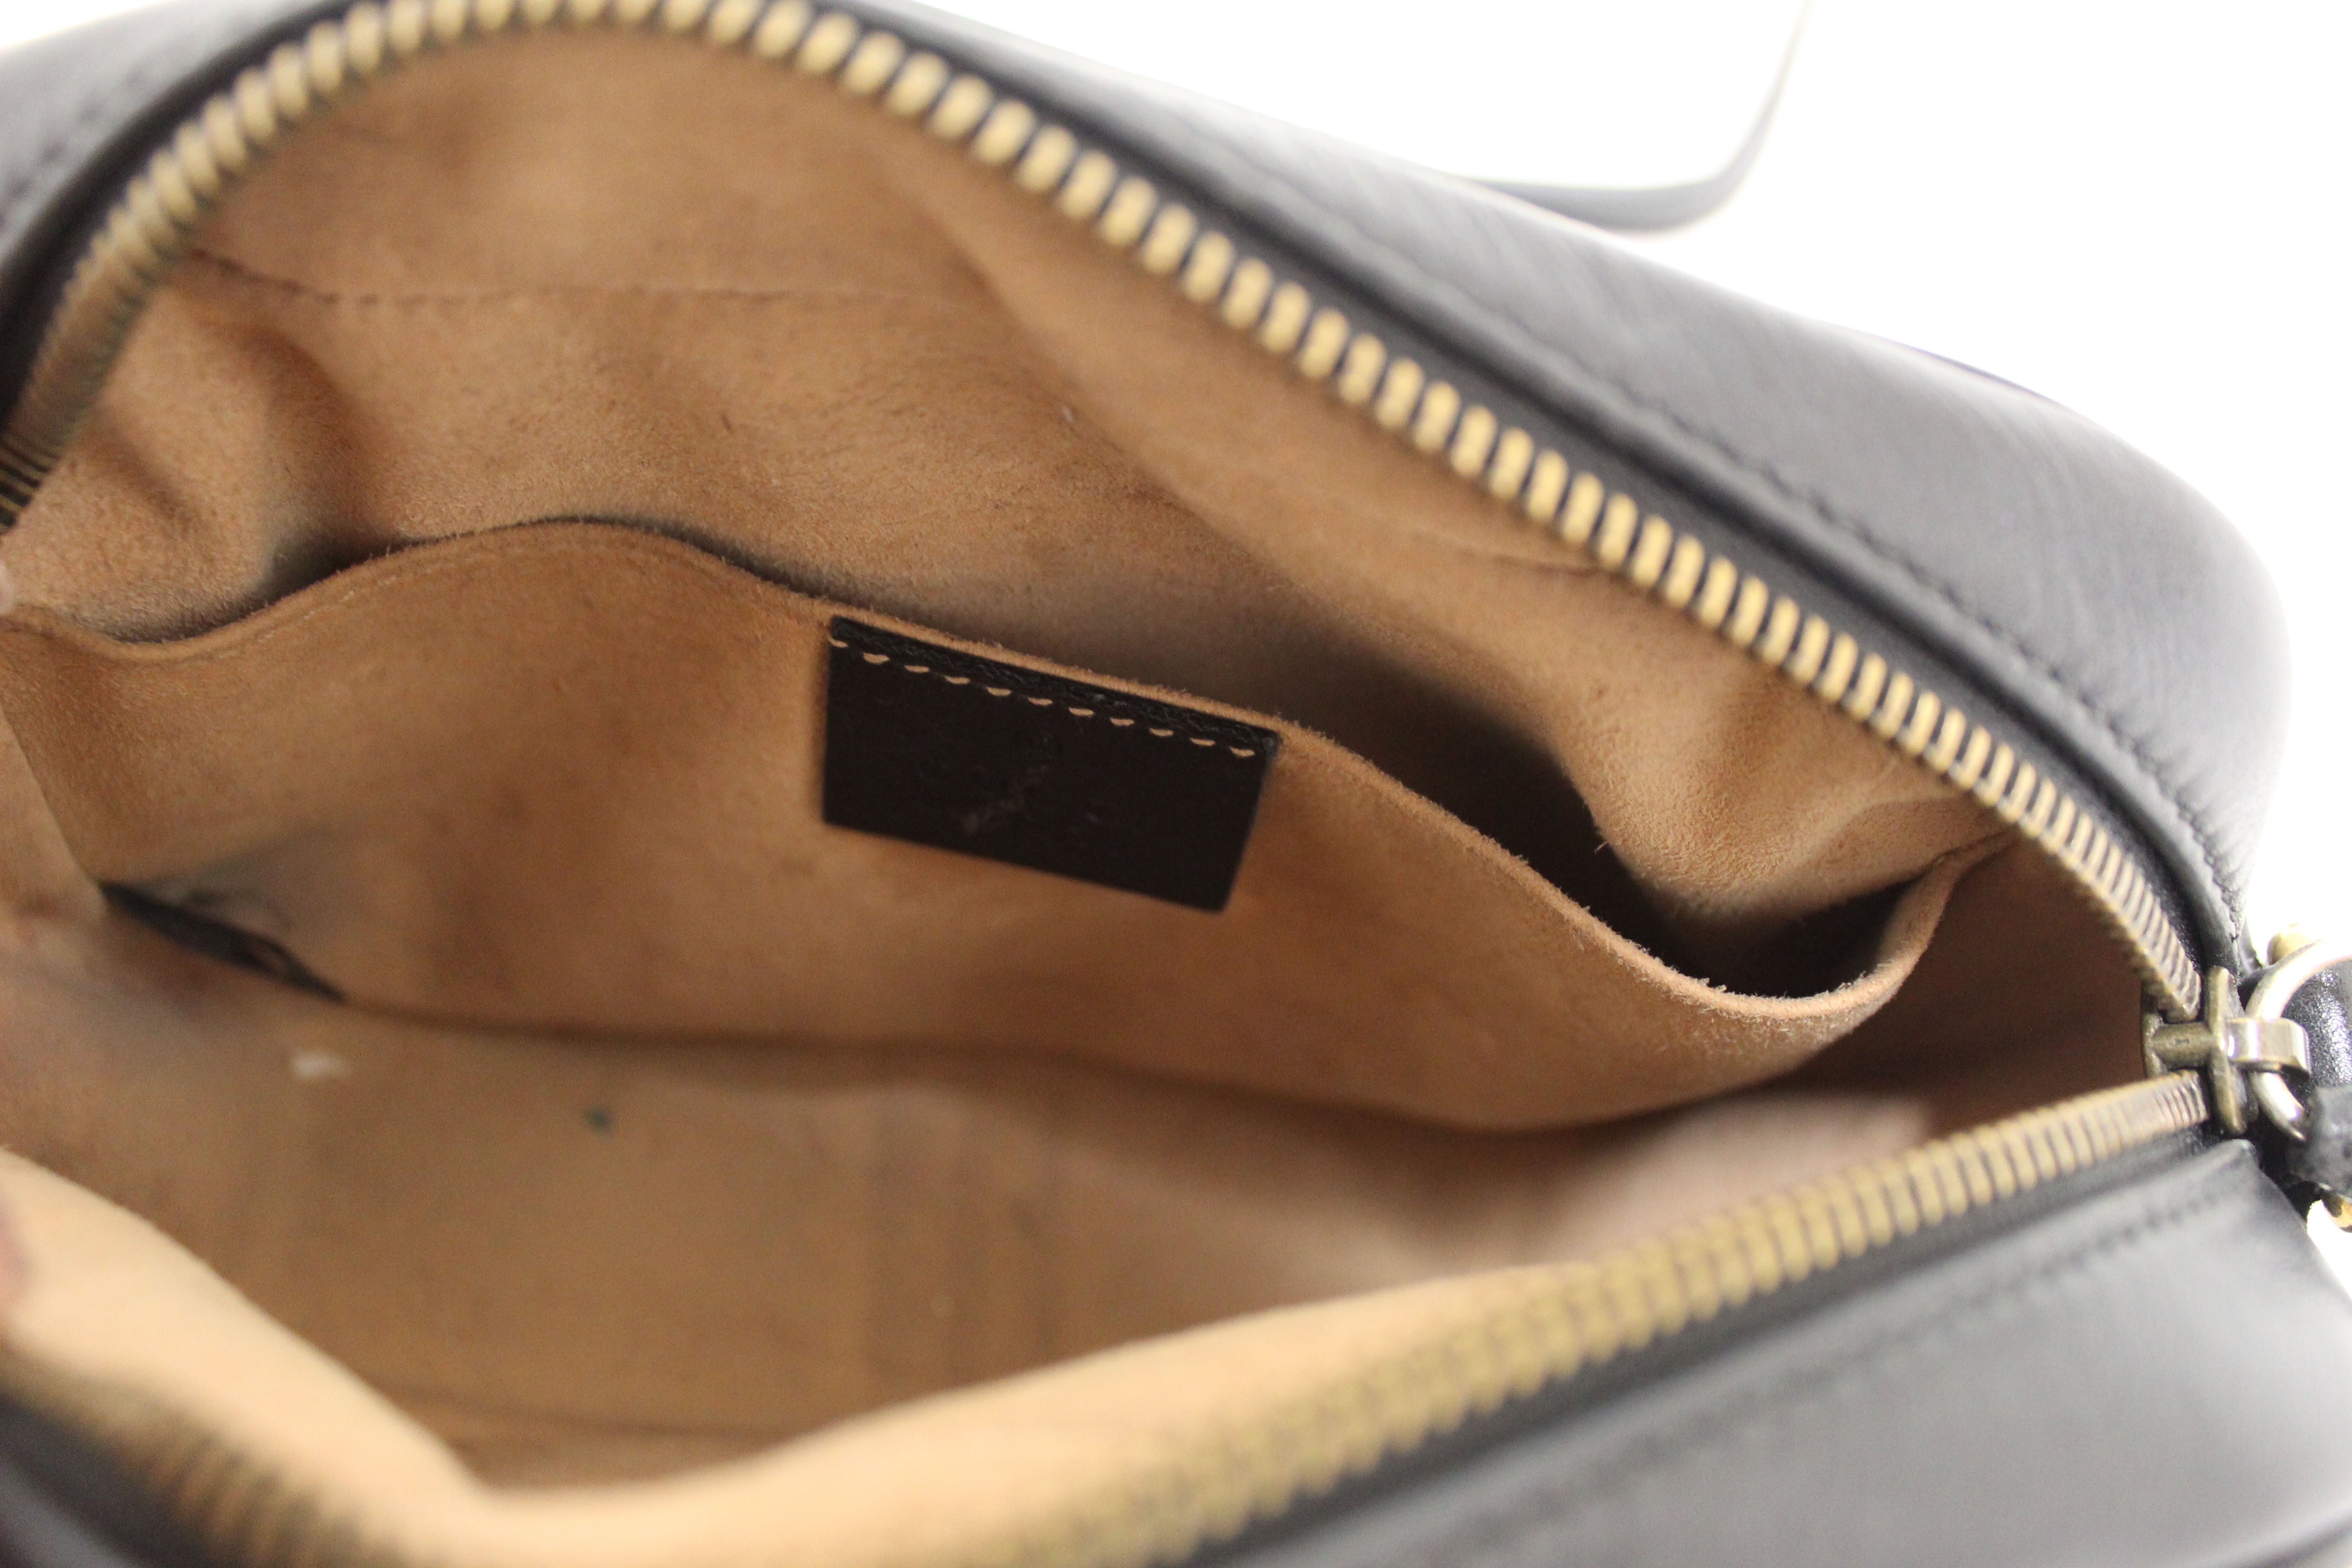 GG Marmont matelassé leather super mini bag in black chevron leather